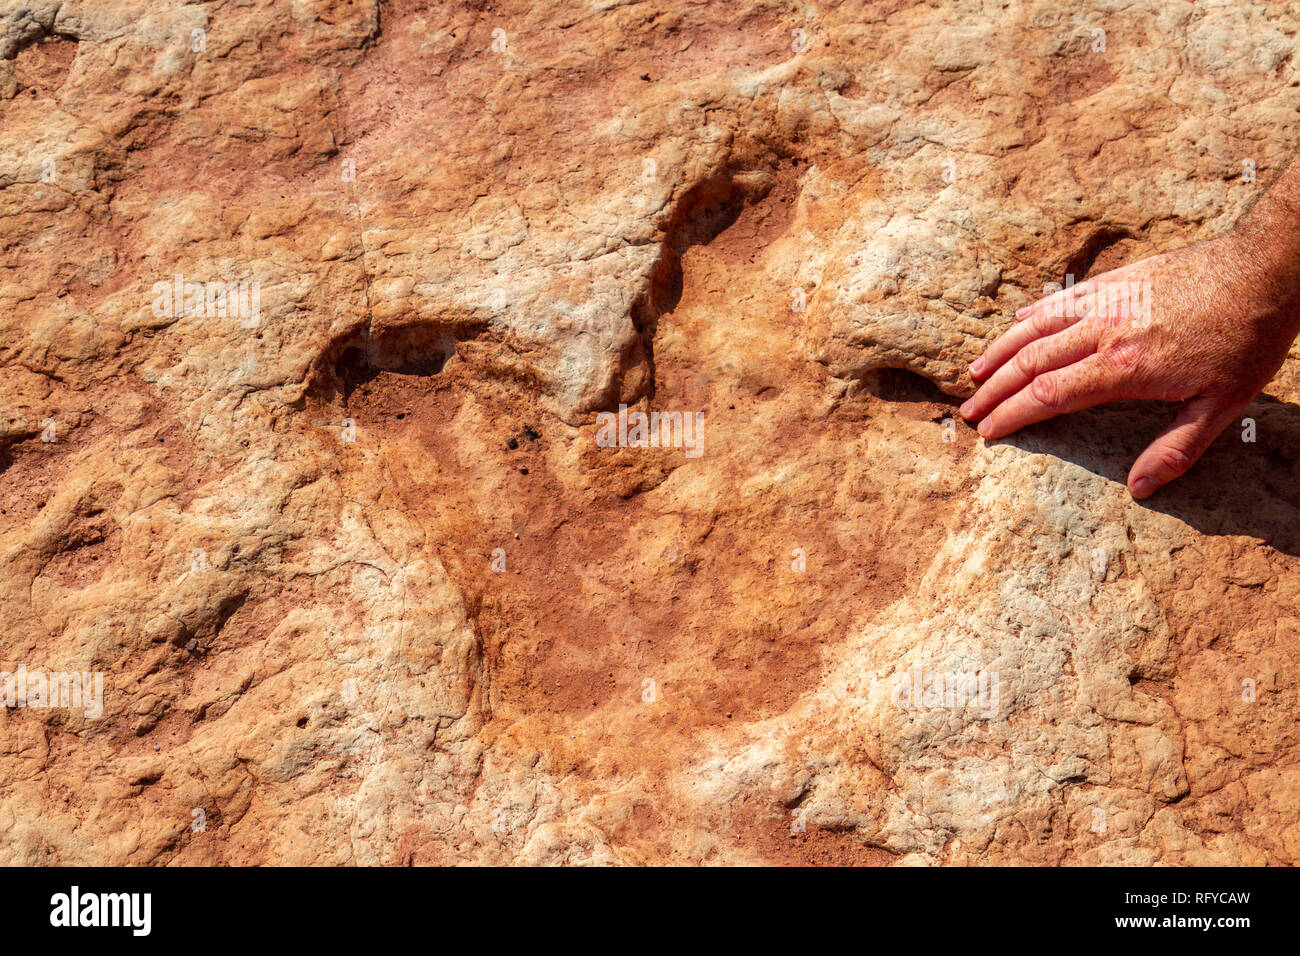 Close up of three toed dinosaur tracks, with a human hand for scale, at the Moenkopi Dinosaur Tracks site near Tuba City, Arizona, United States. Stock Photo